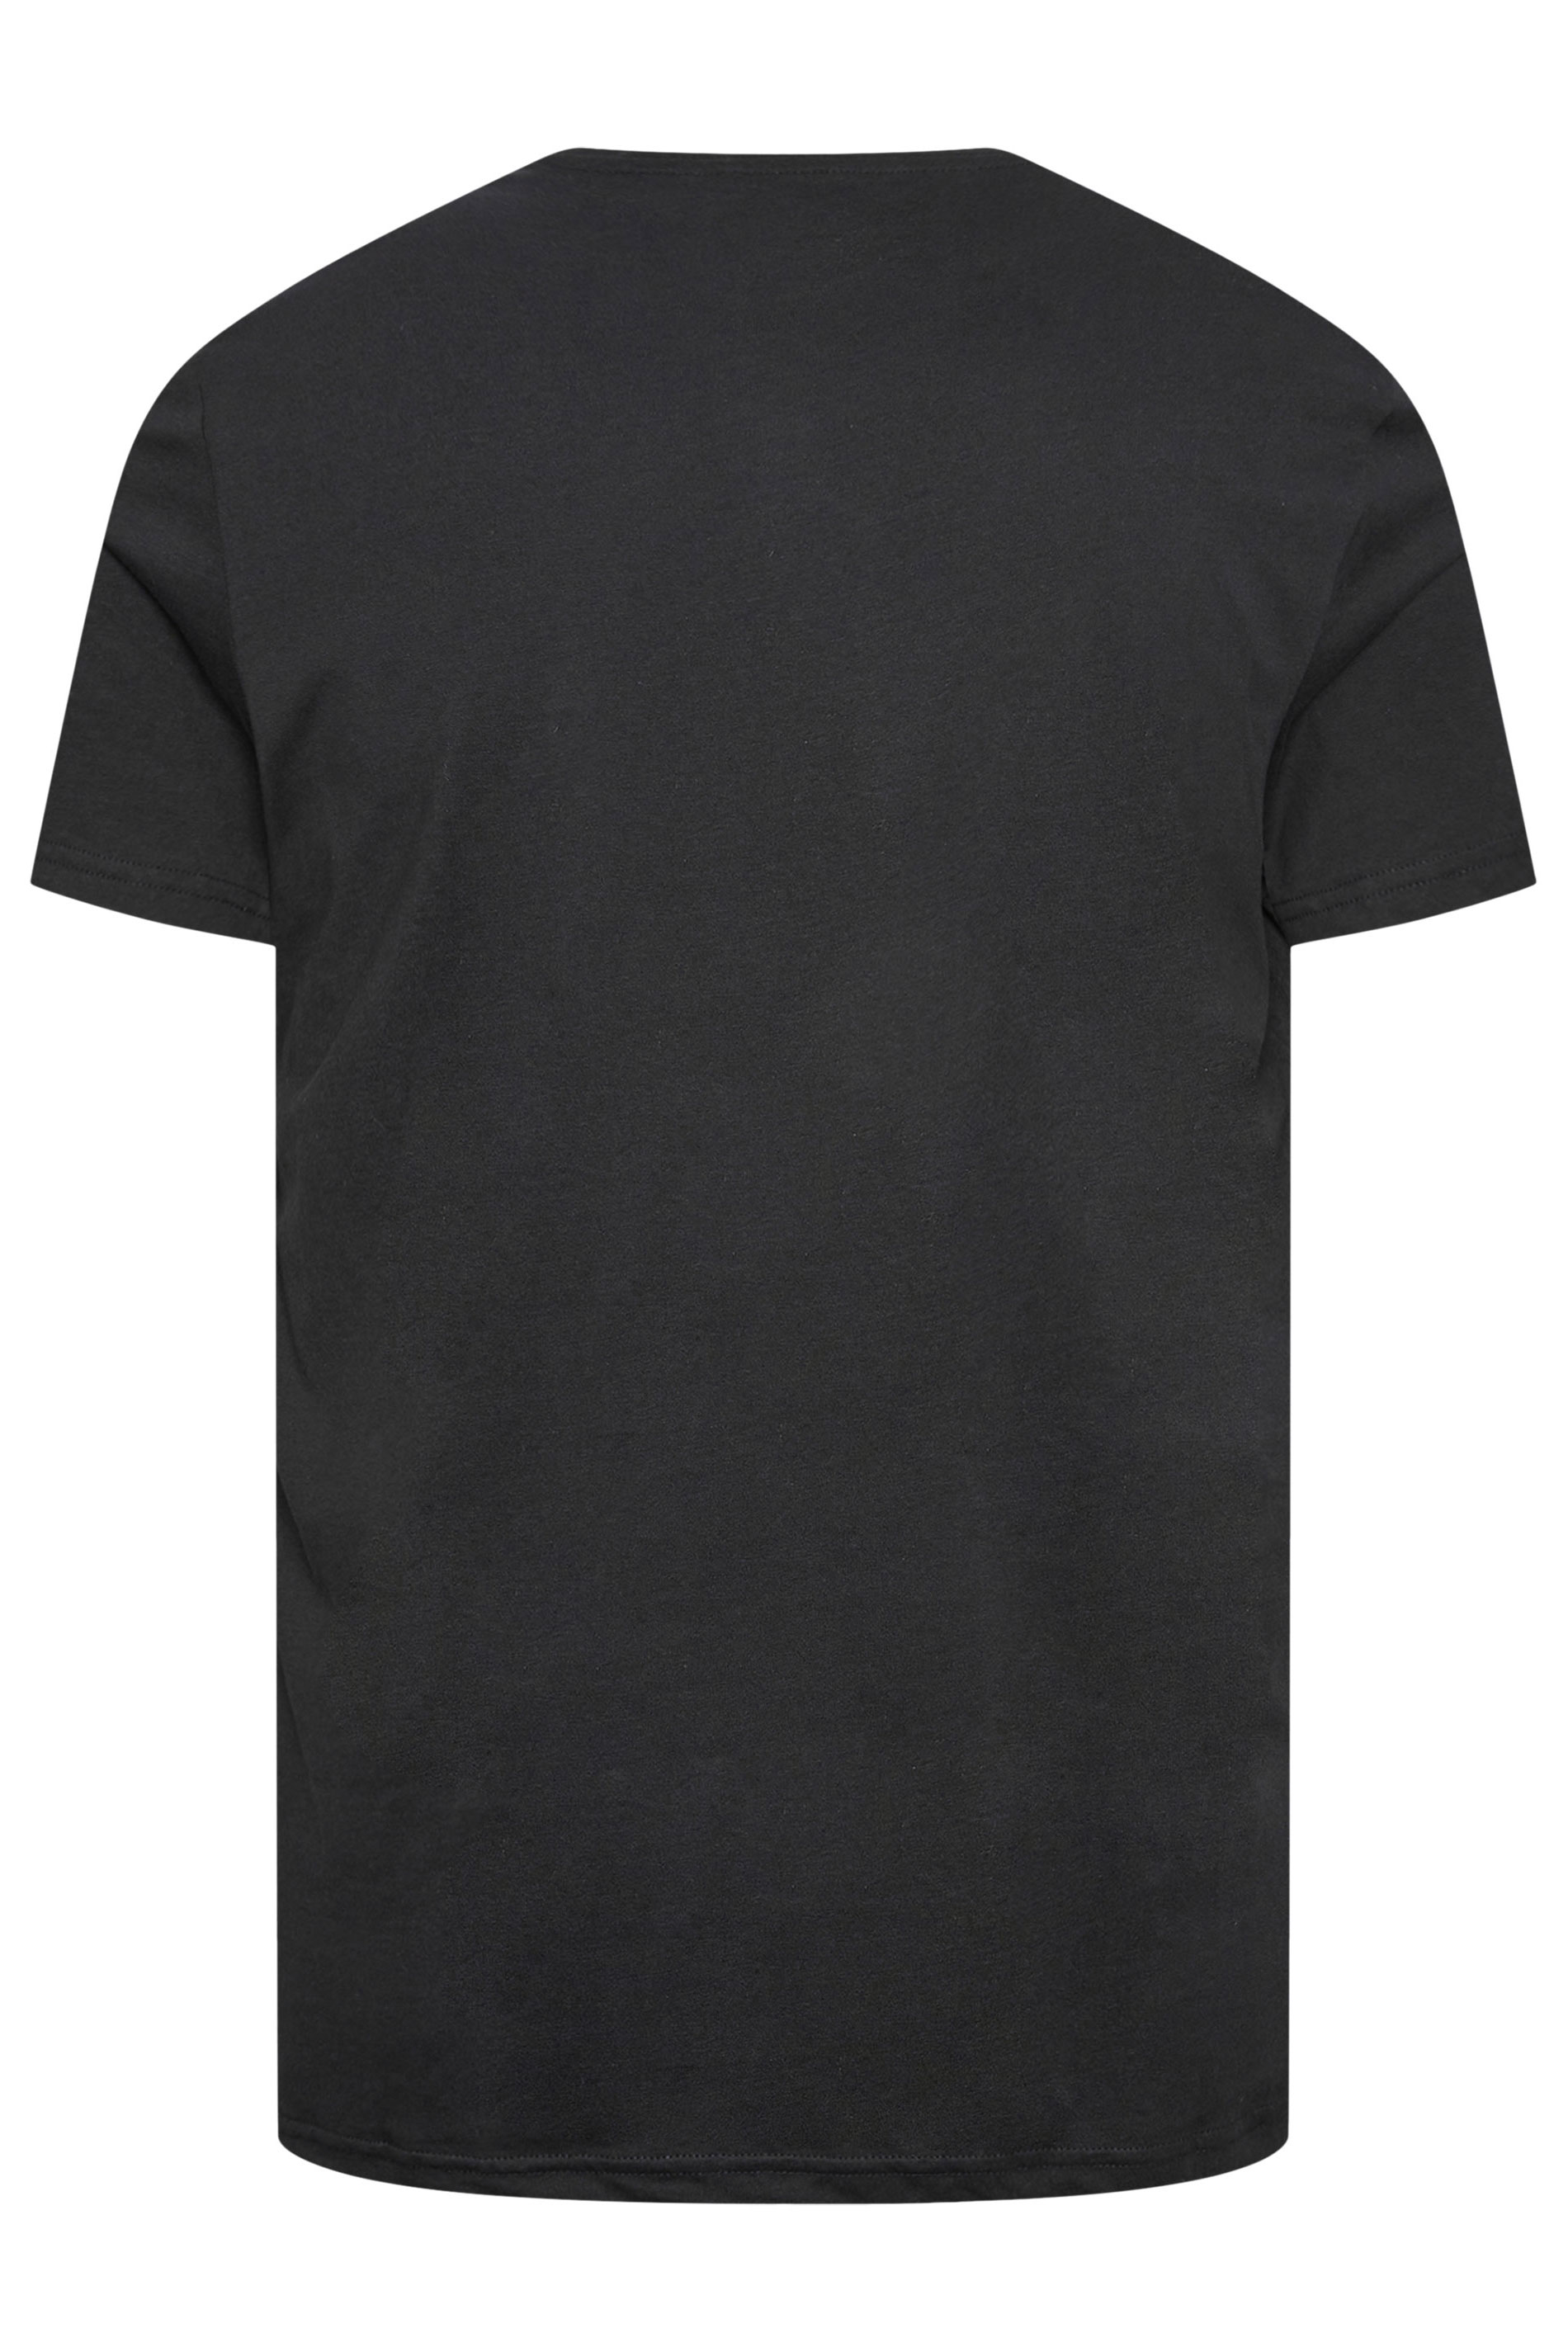 BLEND Big & Tall Black 'Original' Printed T-Shirt | BadRhino 3